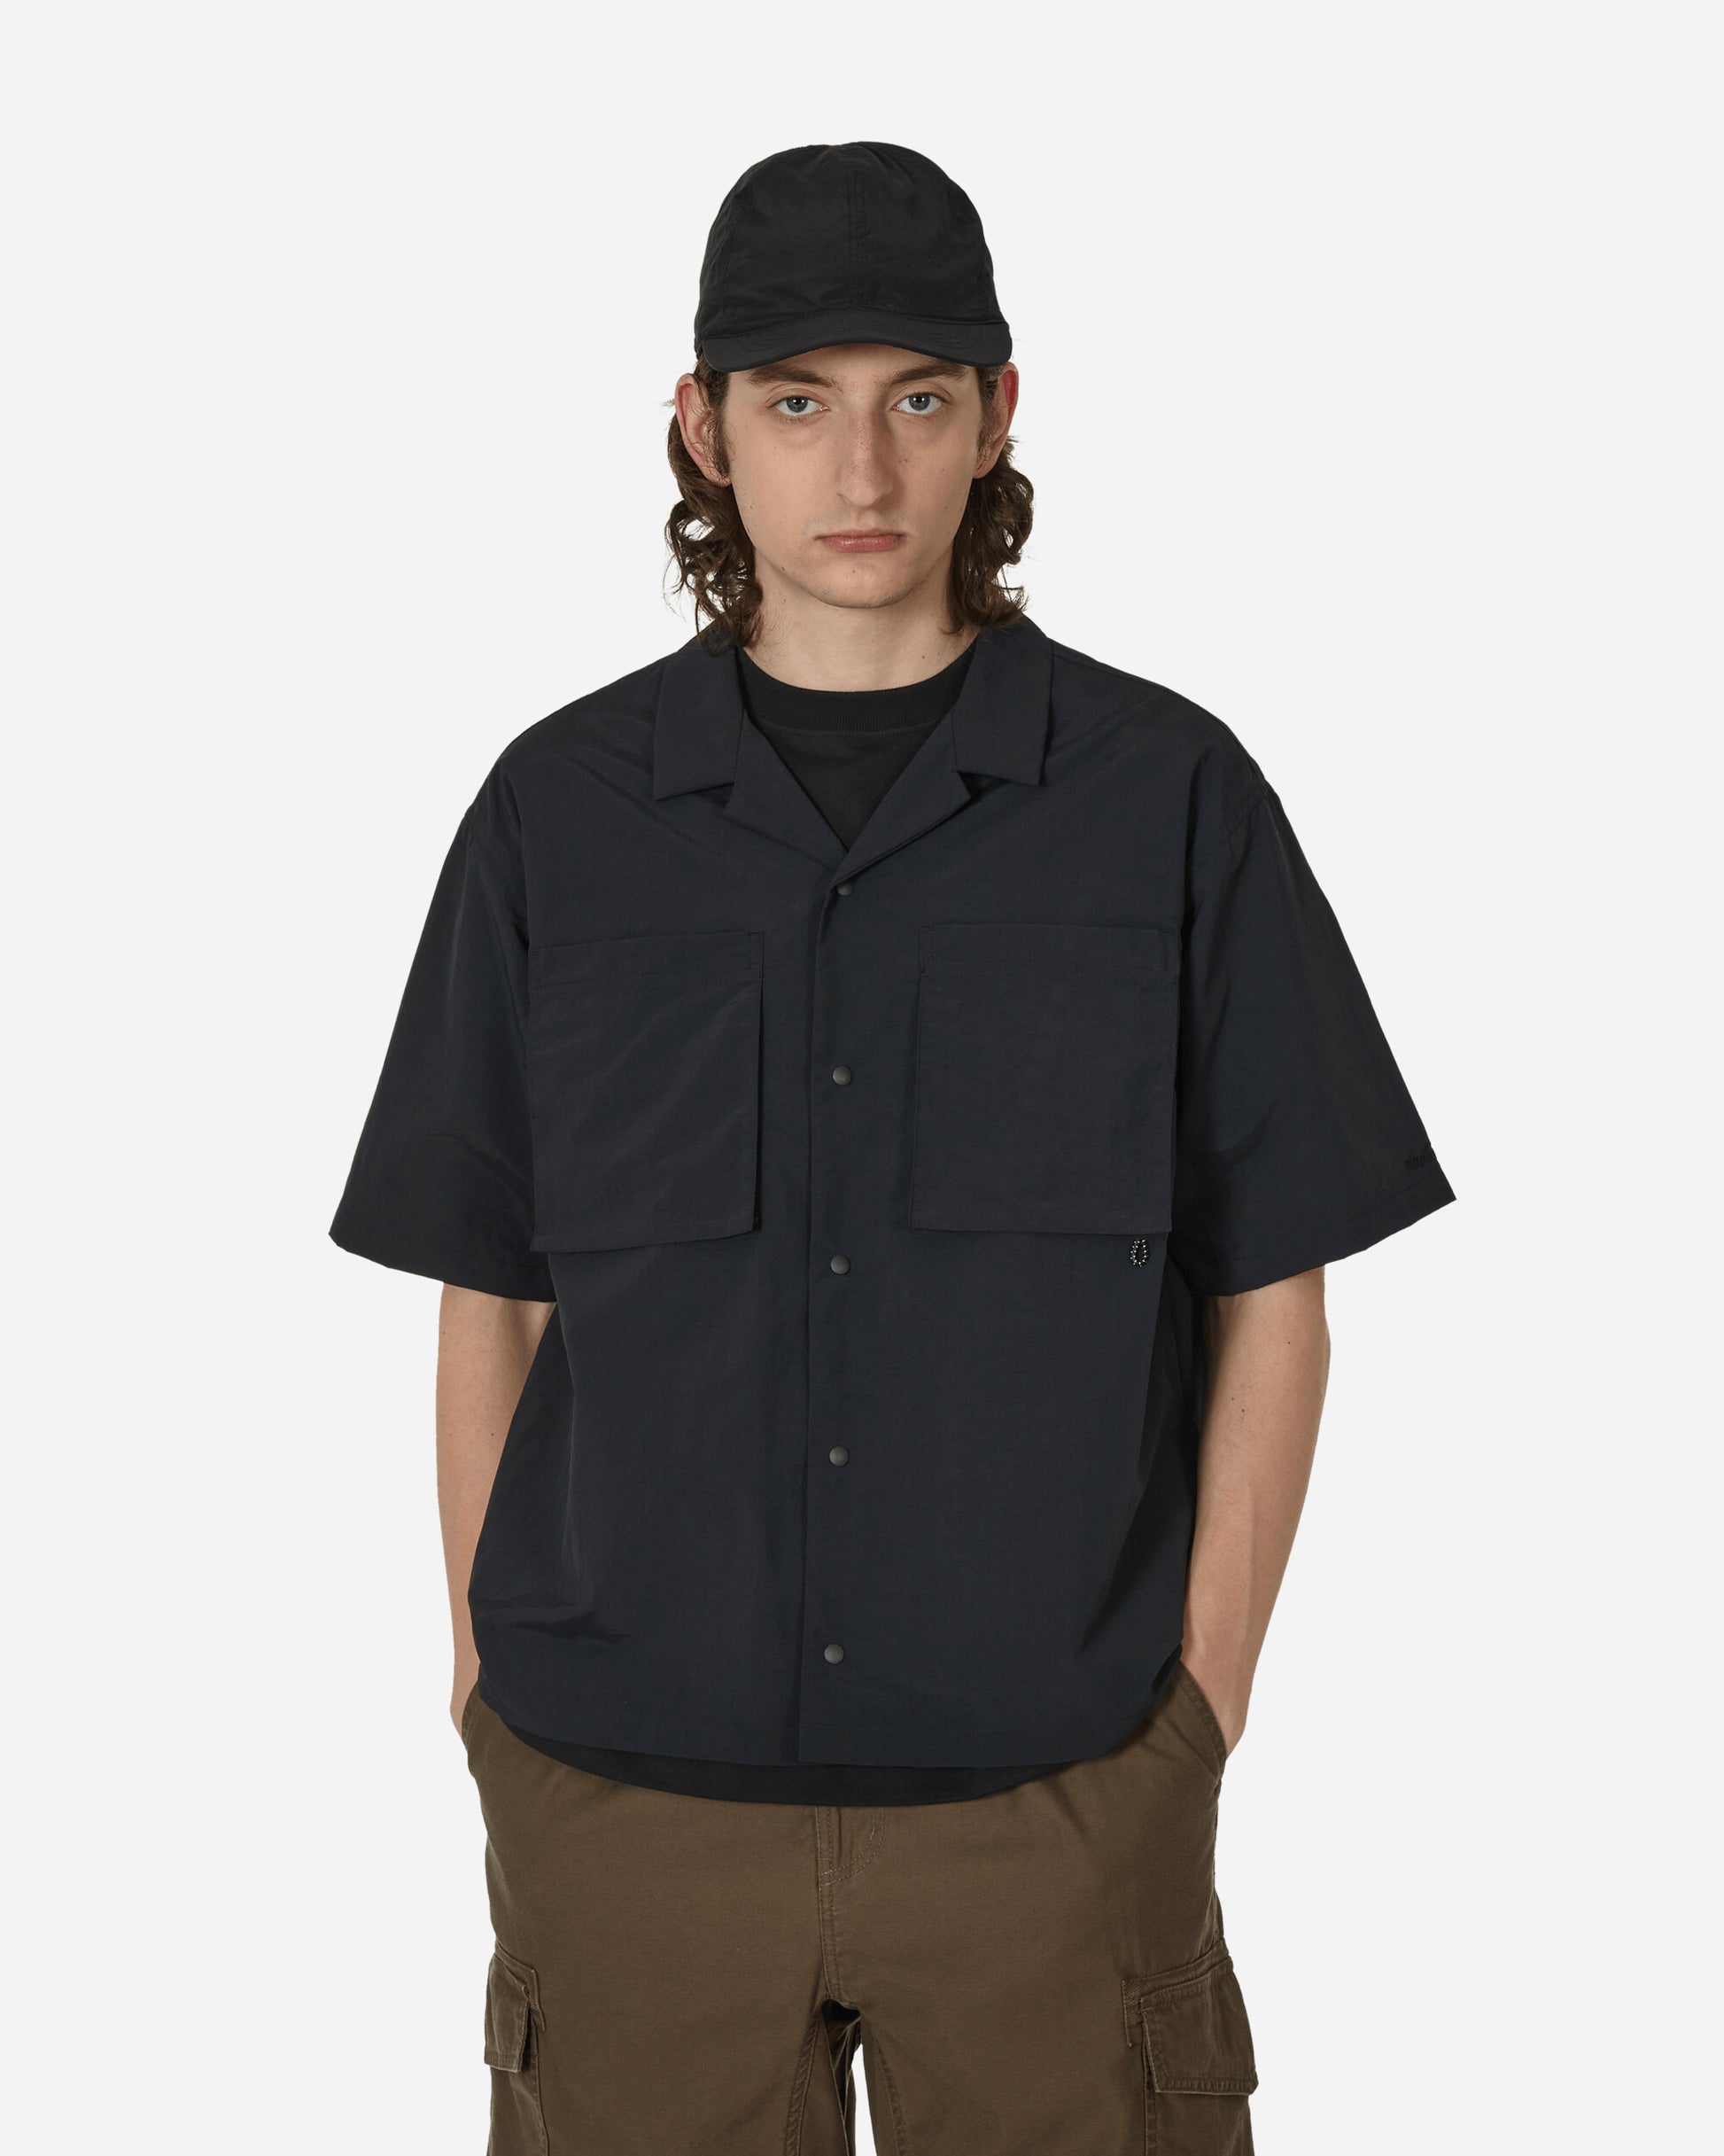 Wild Things Half Sleeve Camp Shirts Black Shirts Shortsleeve Shirt WT231-05 BLACK